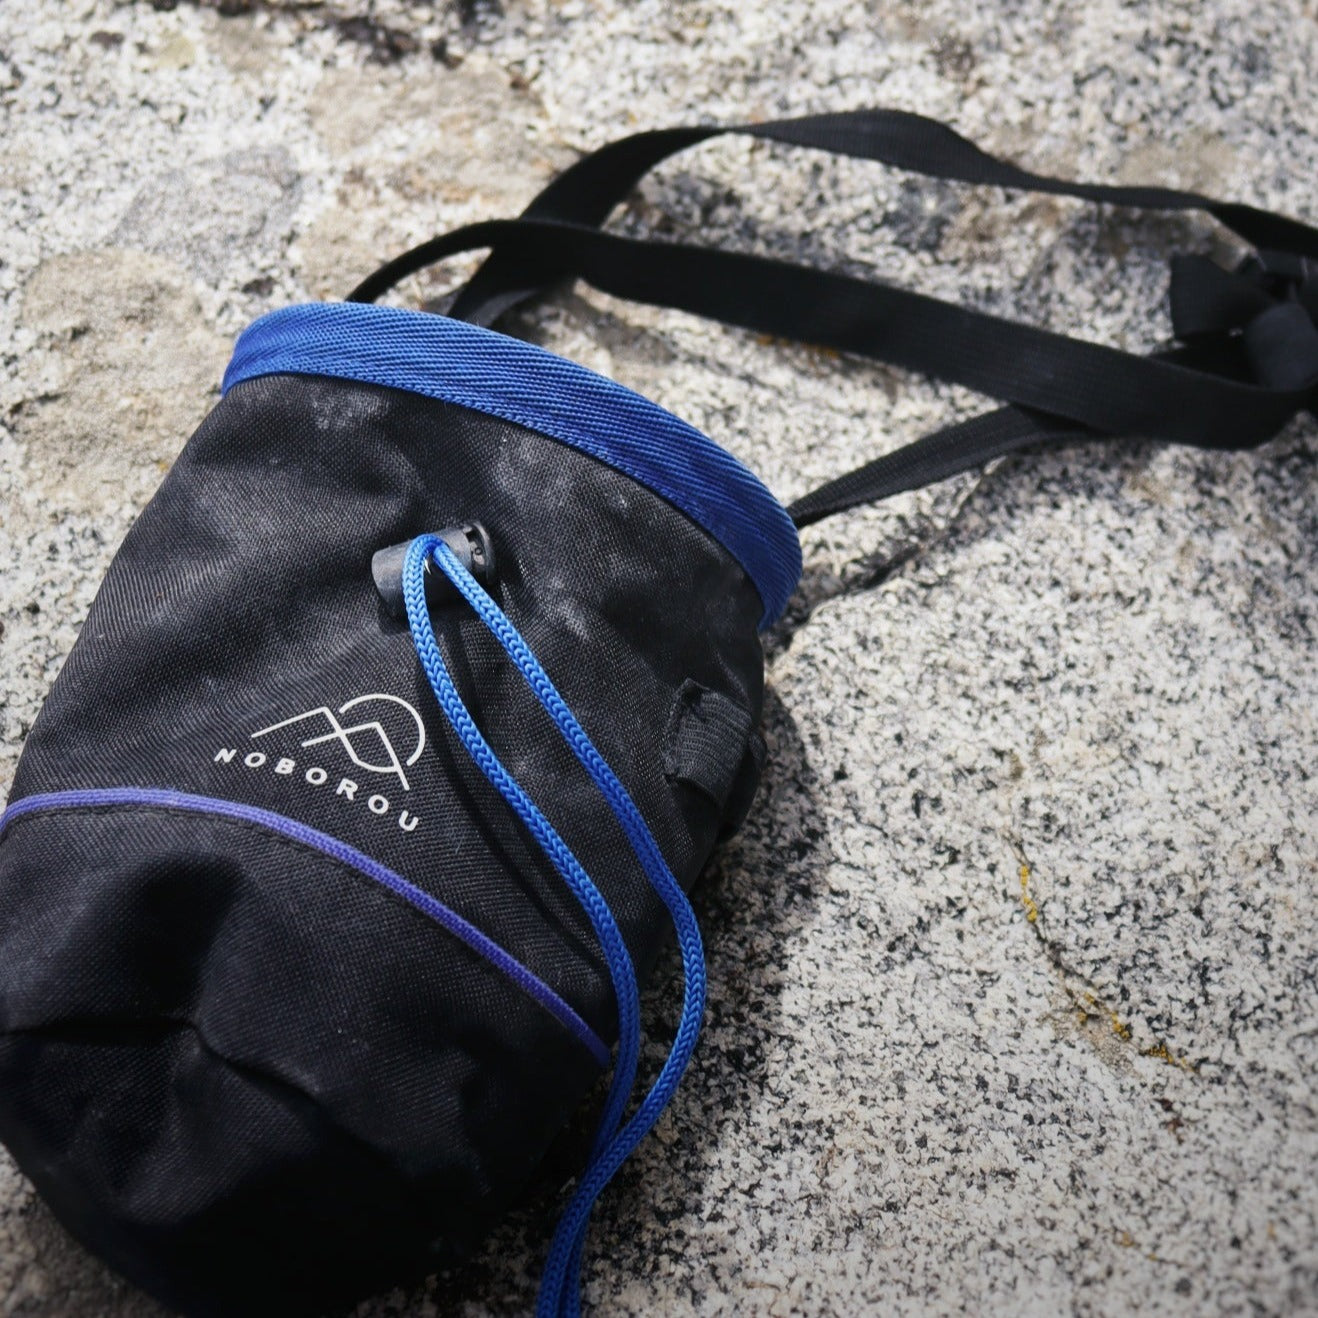  Noborou Chalk Bag for Rock Climbing